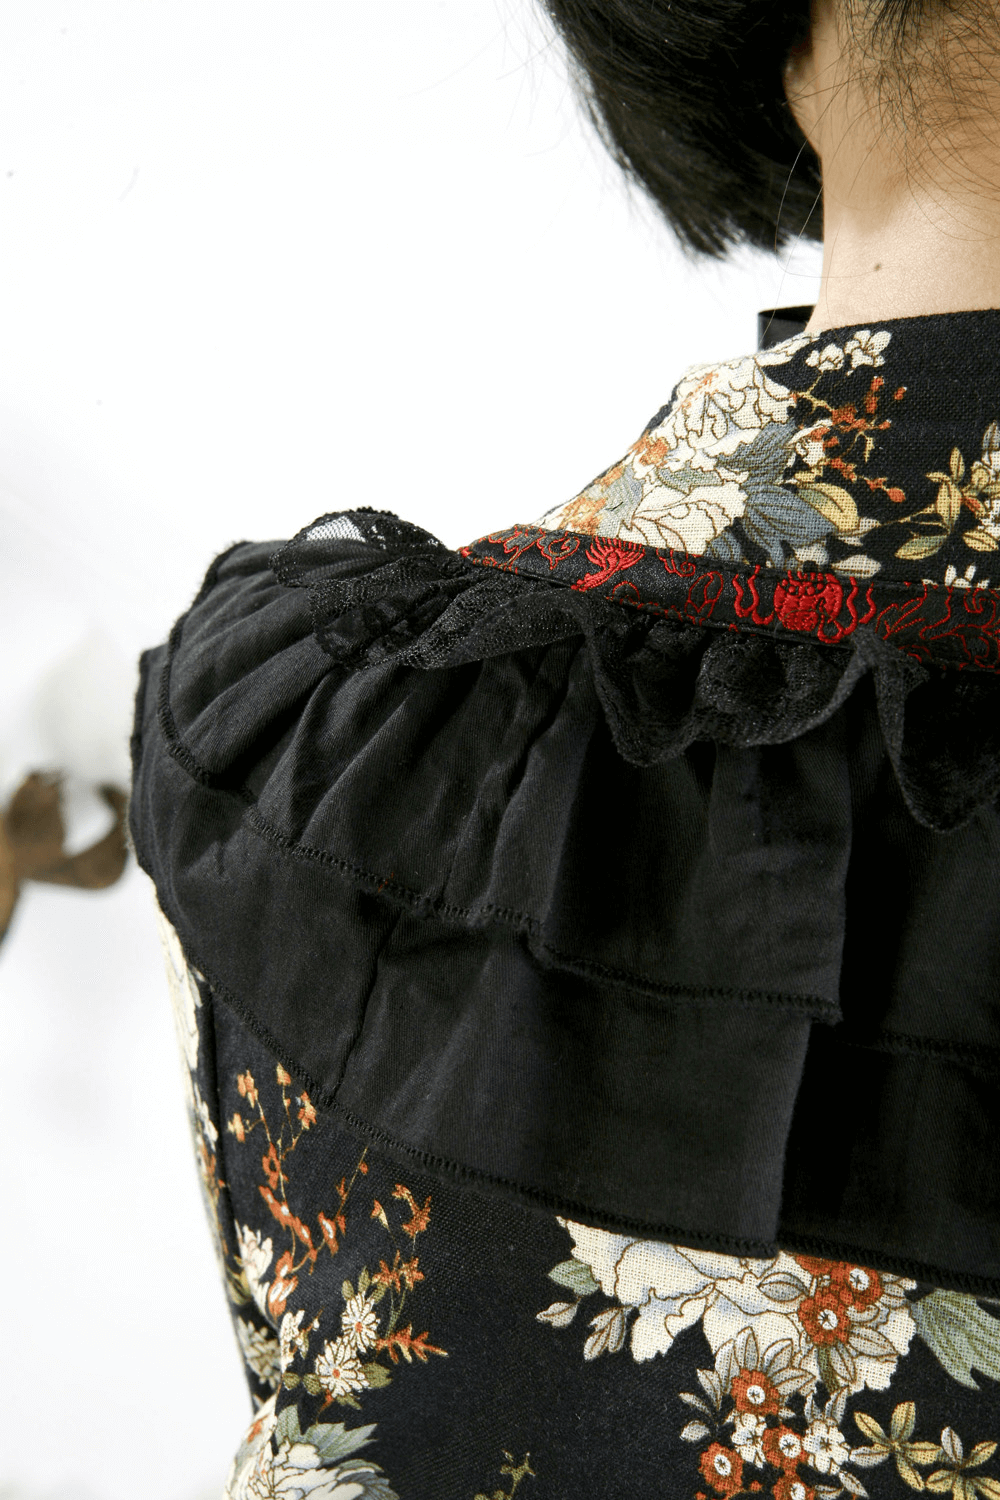 Women's Gothic Inspired Black Floral Lolita Dress